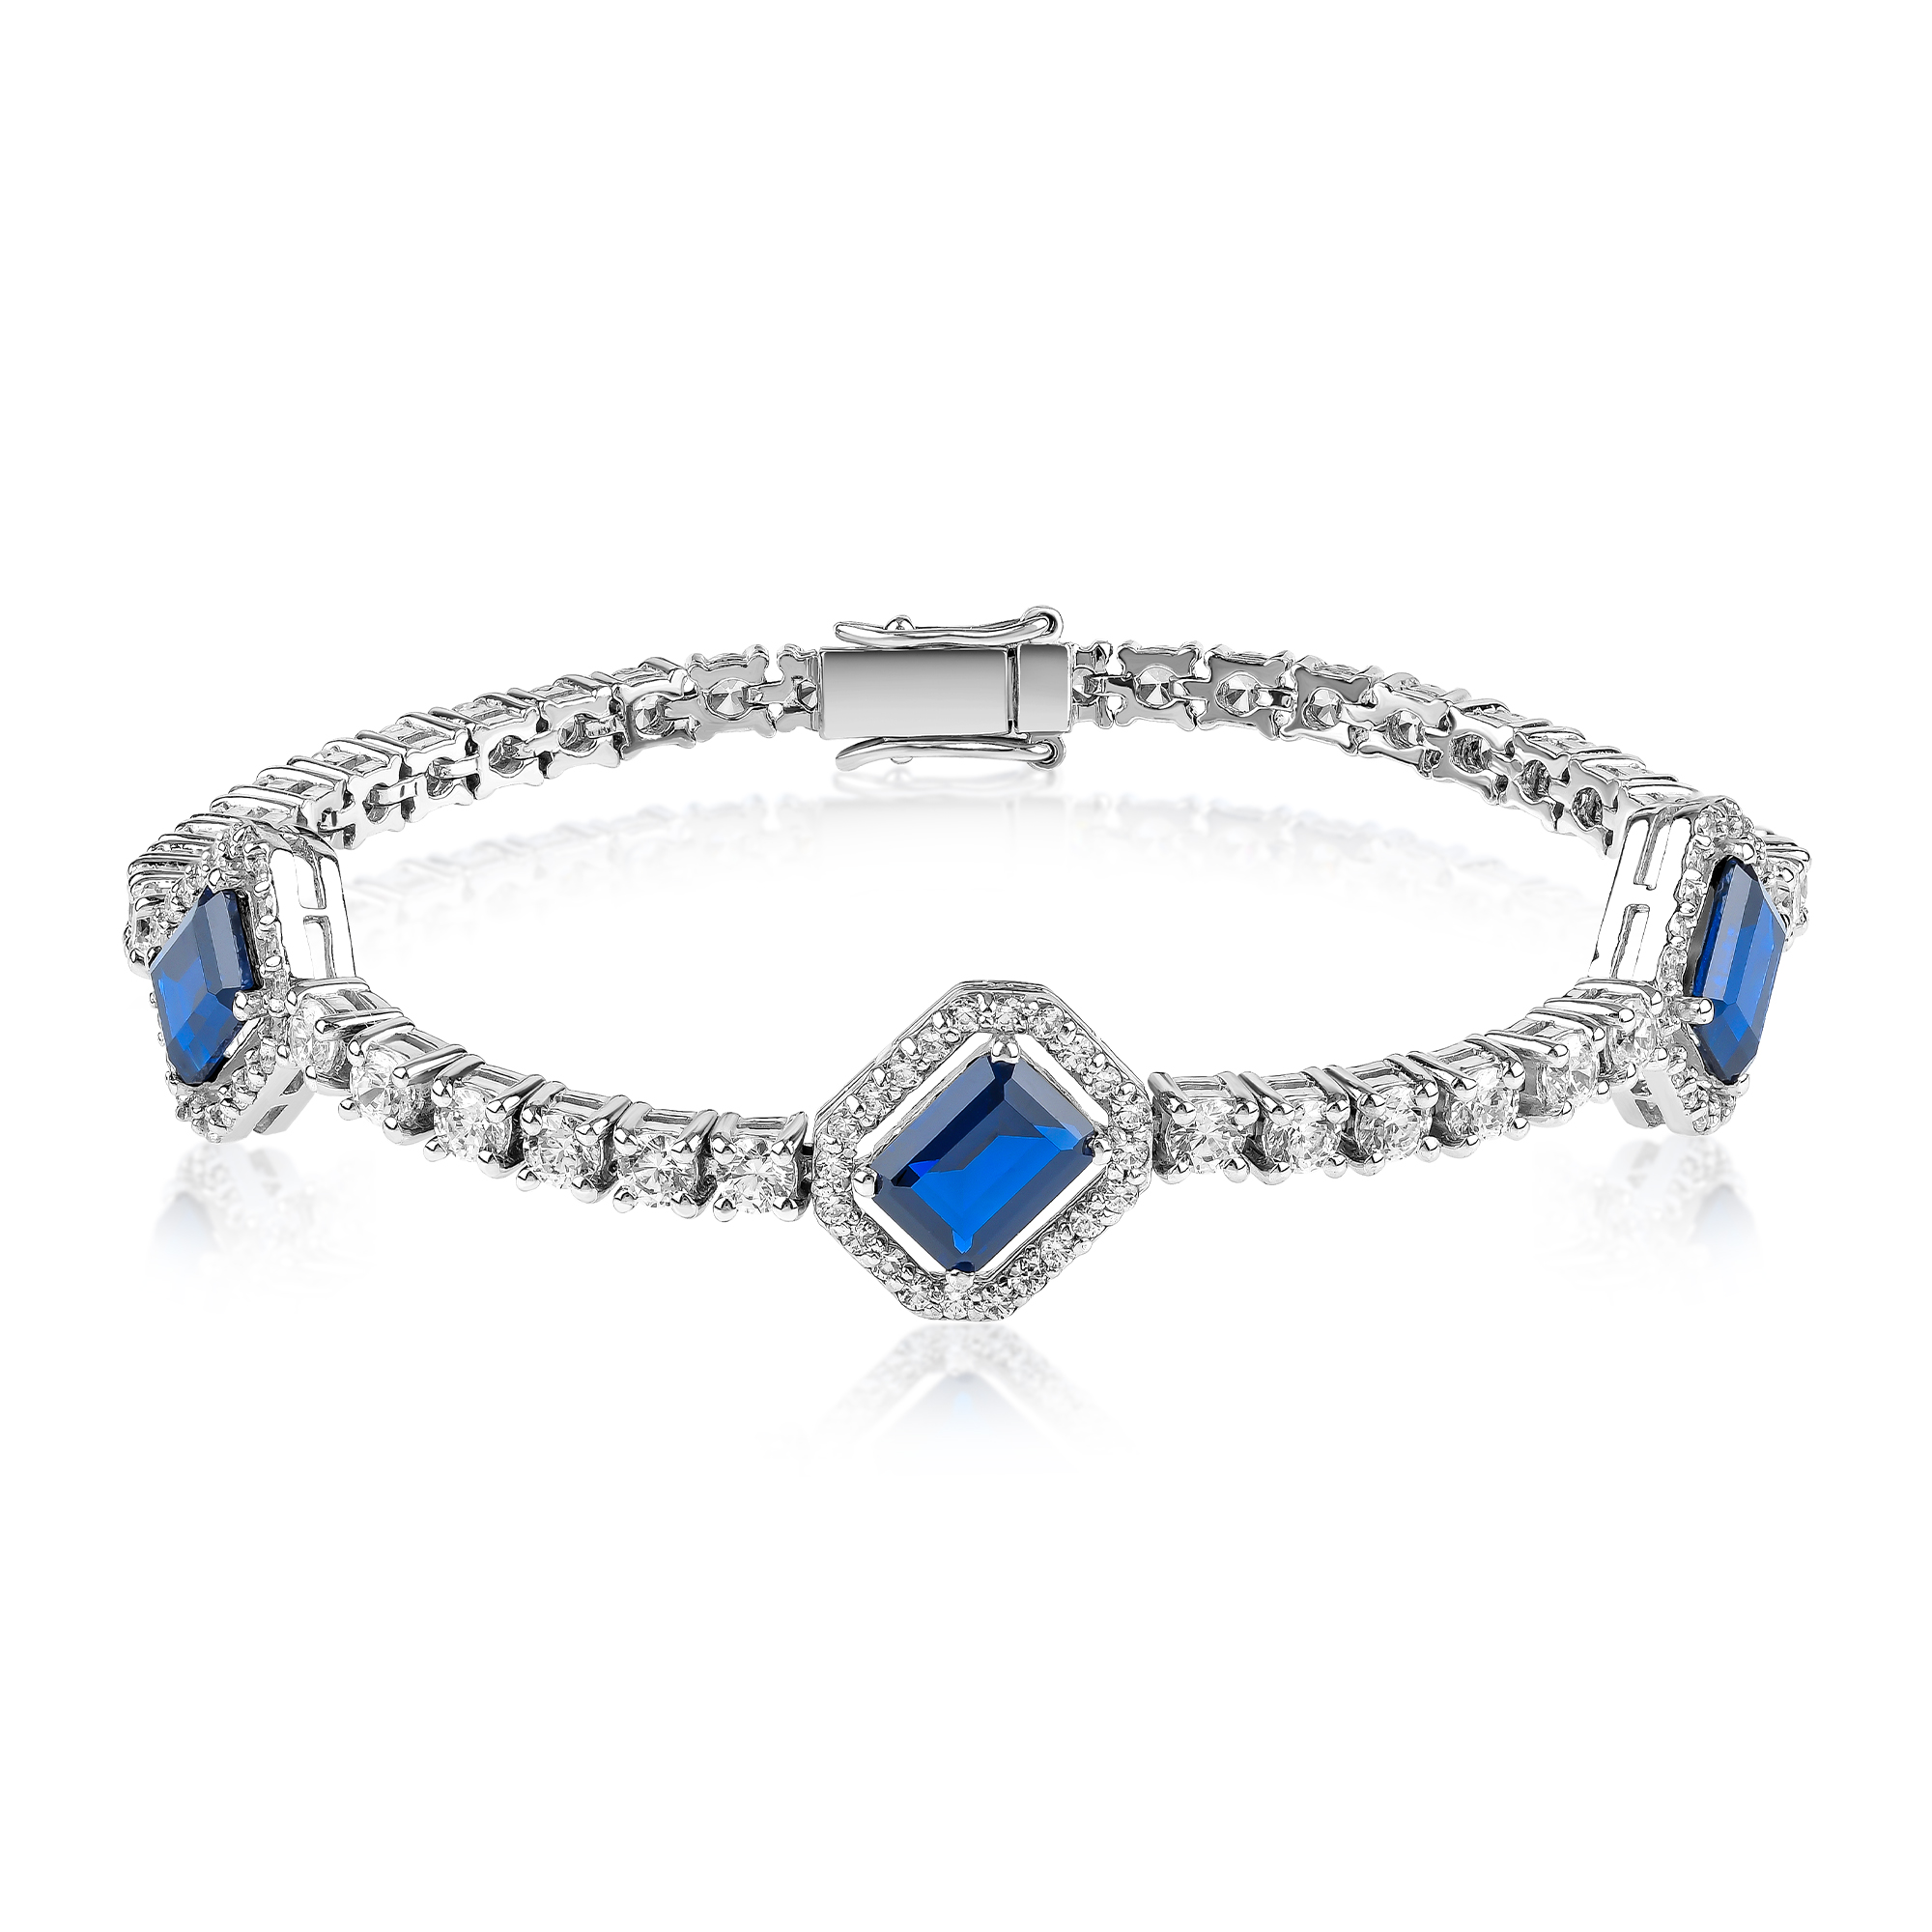 bonic blau bracelet